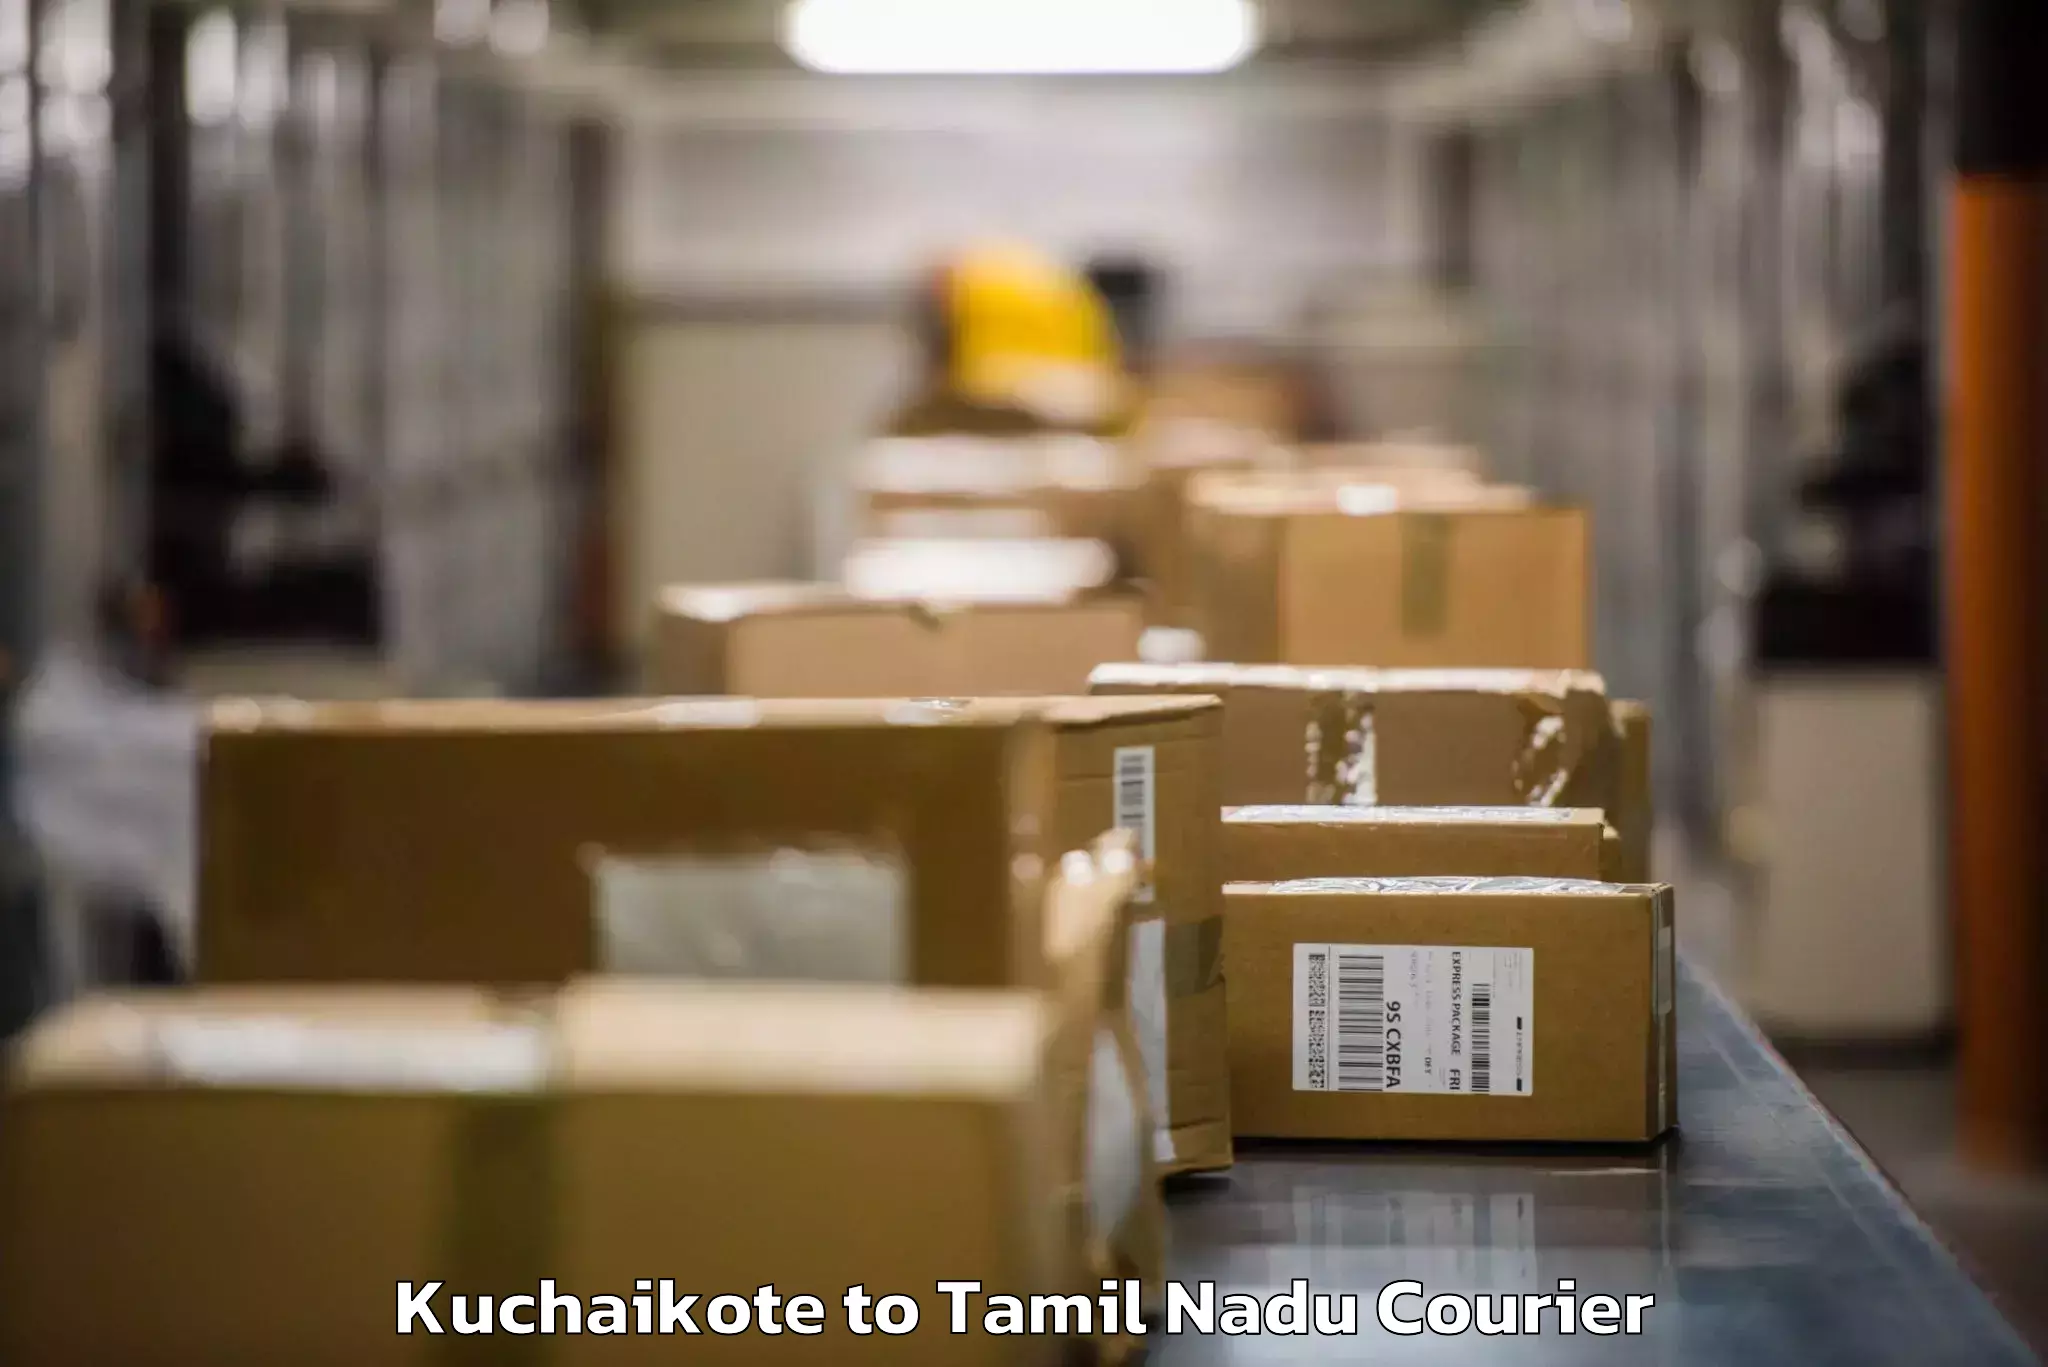 Emergency baggage service Kuchaikote to Chennai Port